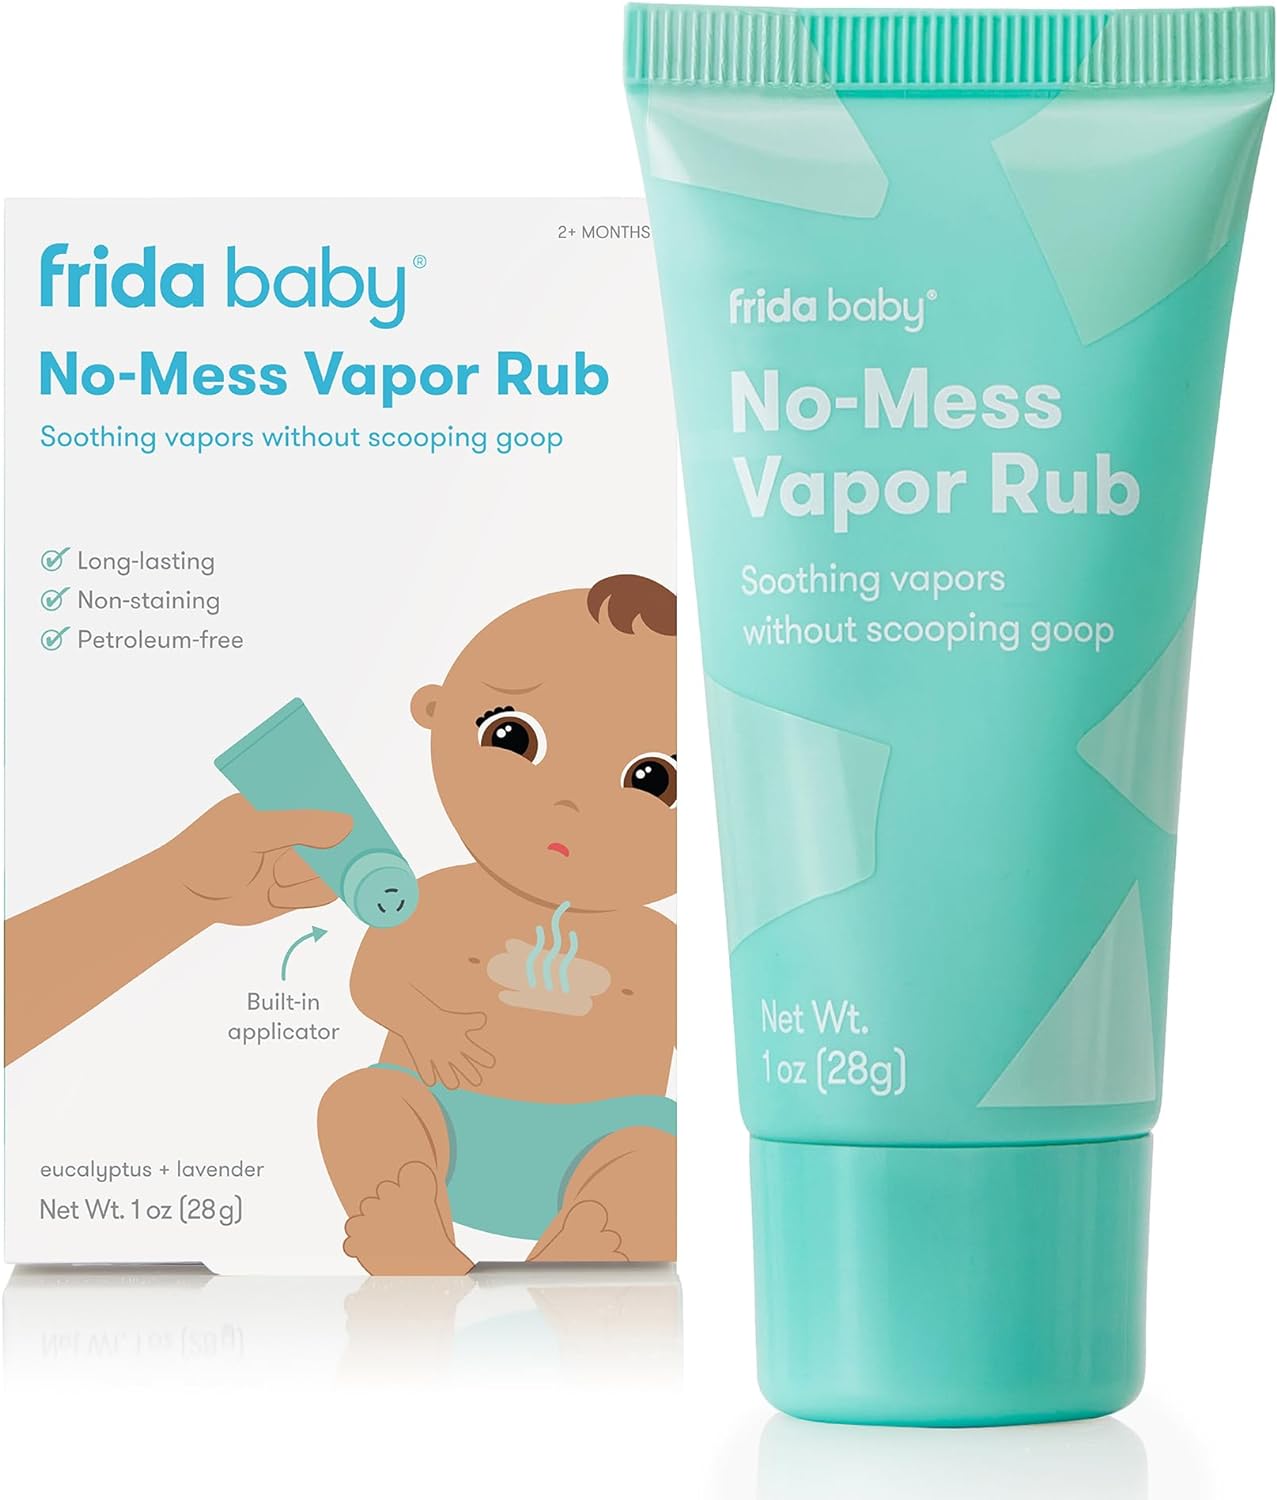 Frida Baby No-Mess Vapor Rub, Baby Vapor Rub for Chest, Neck, Back + Foot,Non-staining, Petroleum-Free Hands-Free Applicator Tube, Soothing Eucalyptus & Lavender for Sleep